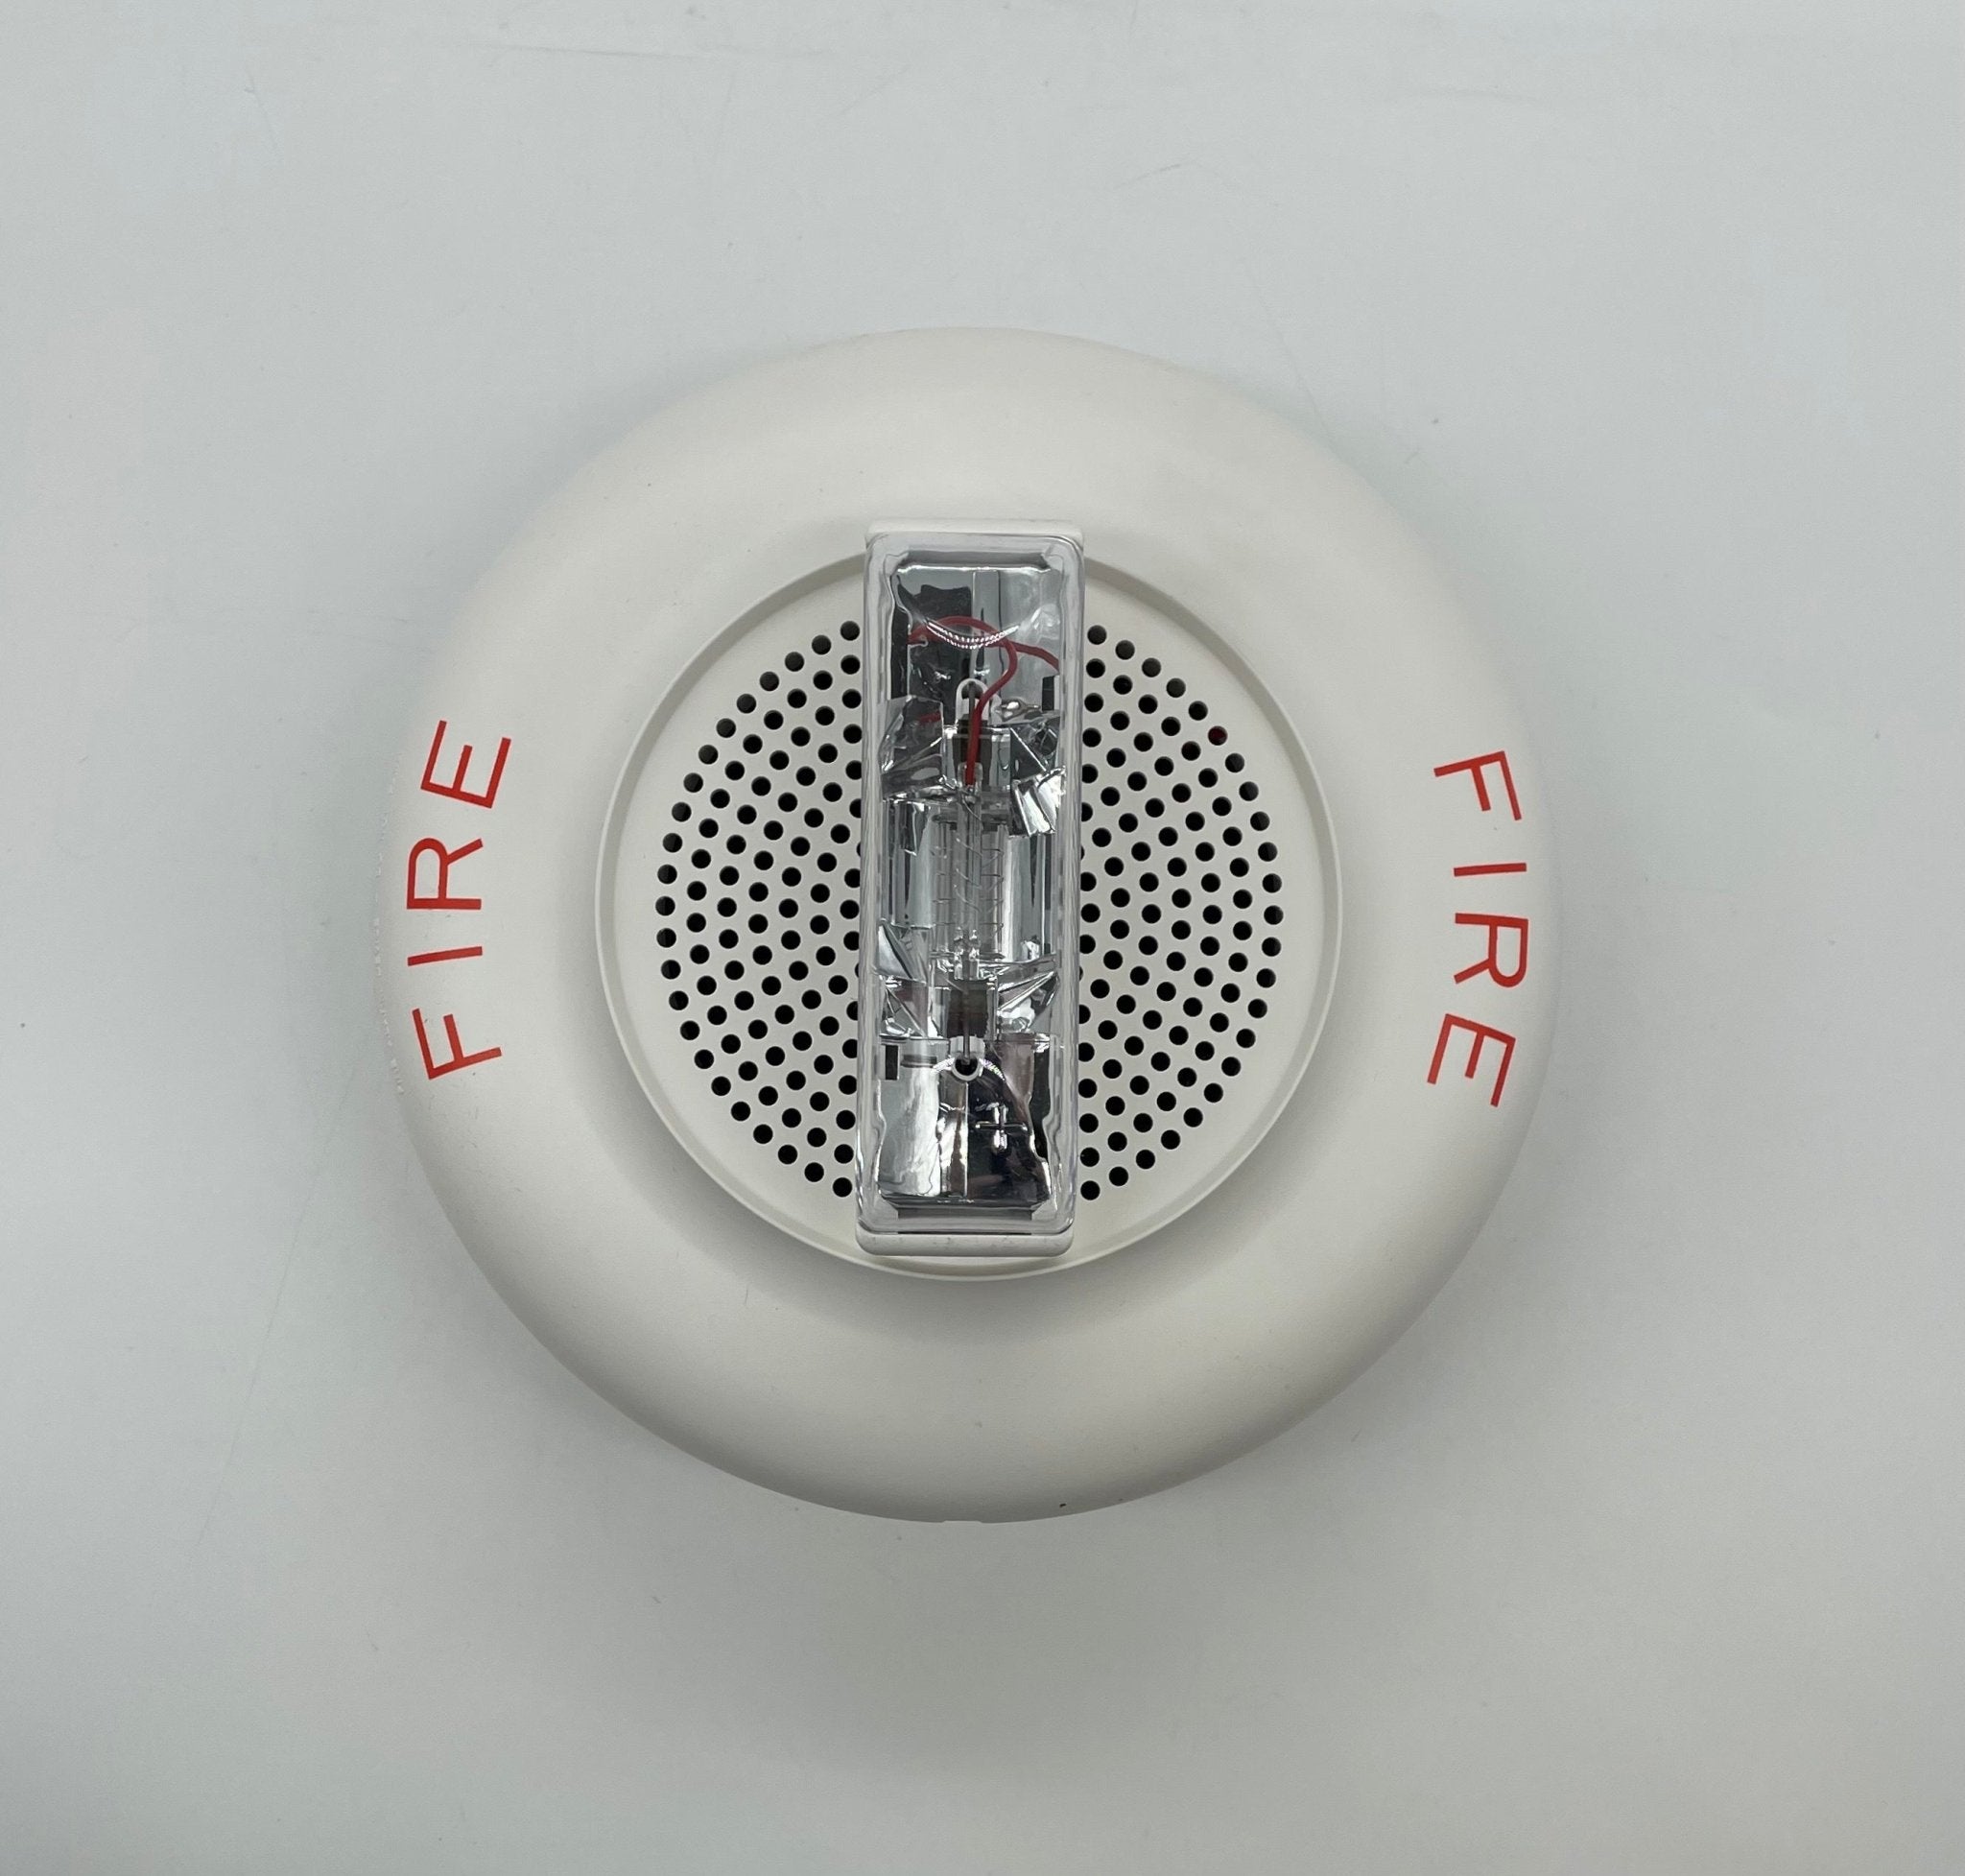 Wheelock E60-24MCC-FW - The Fire Alarm Supplier